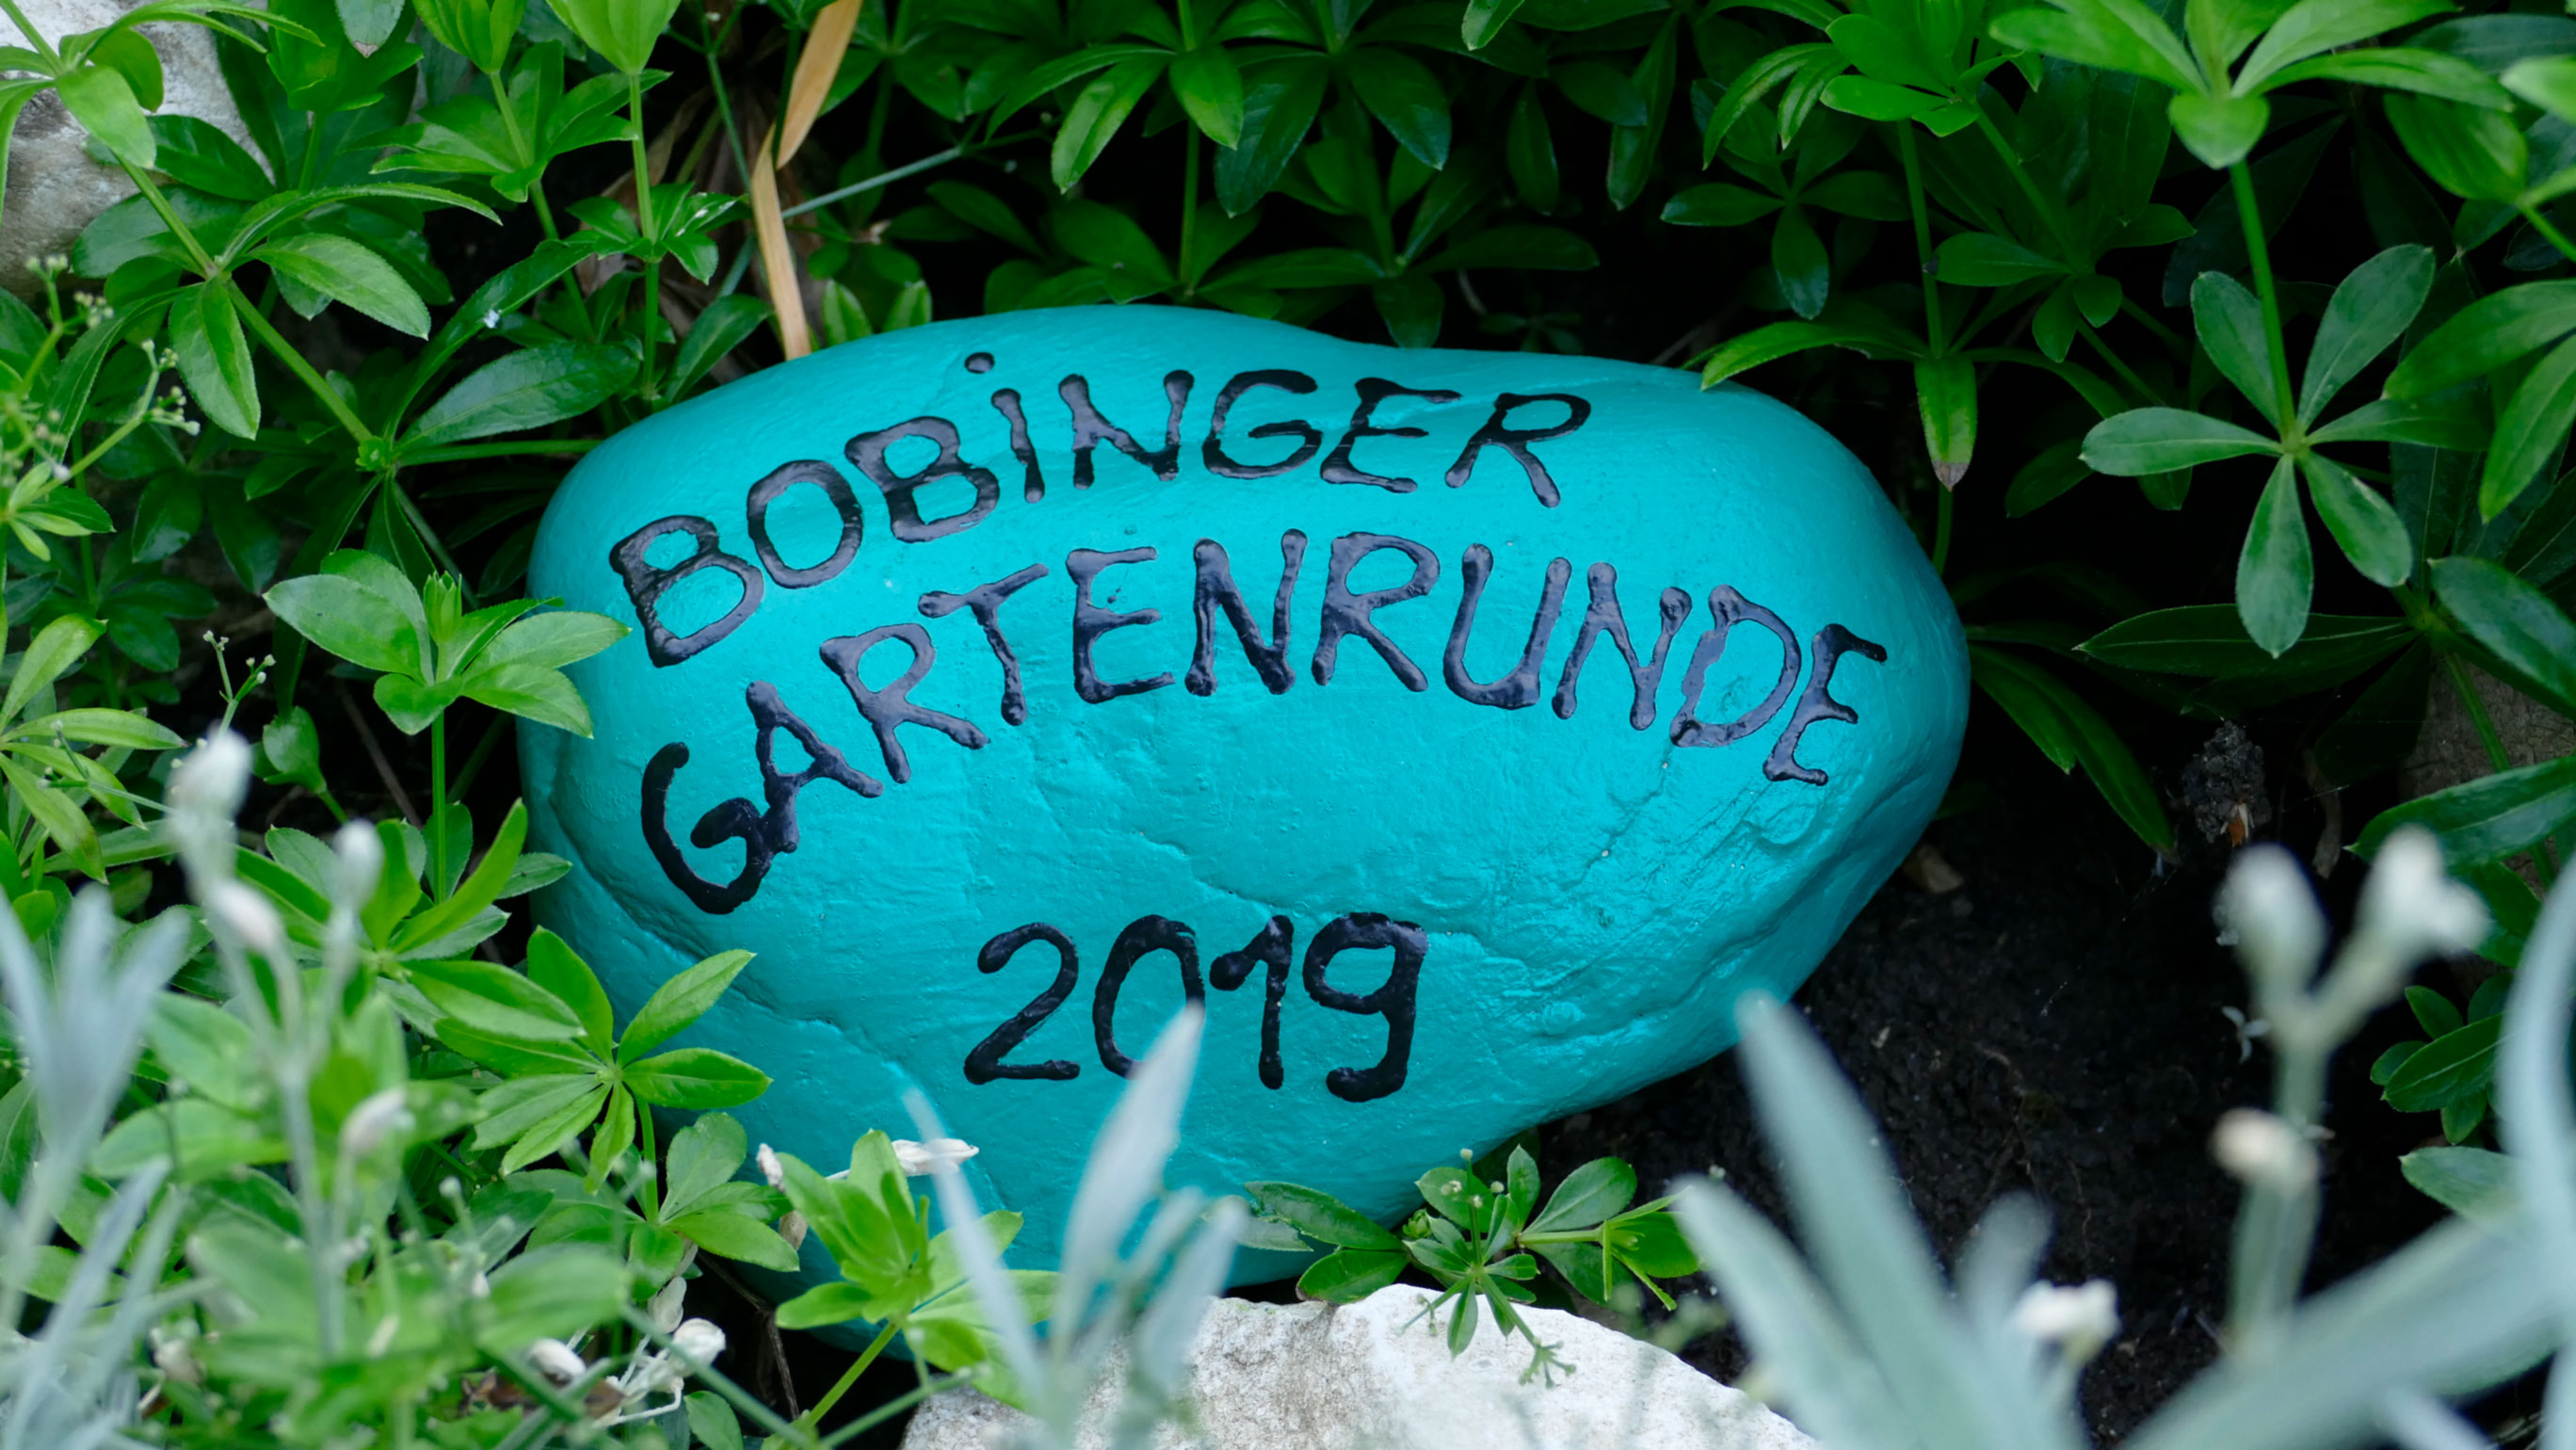 Bobinger Gartenrunde 2019